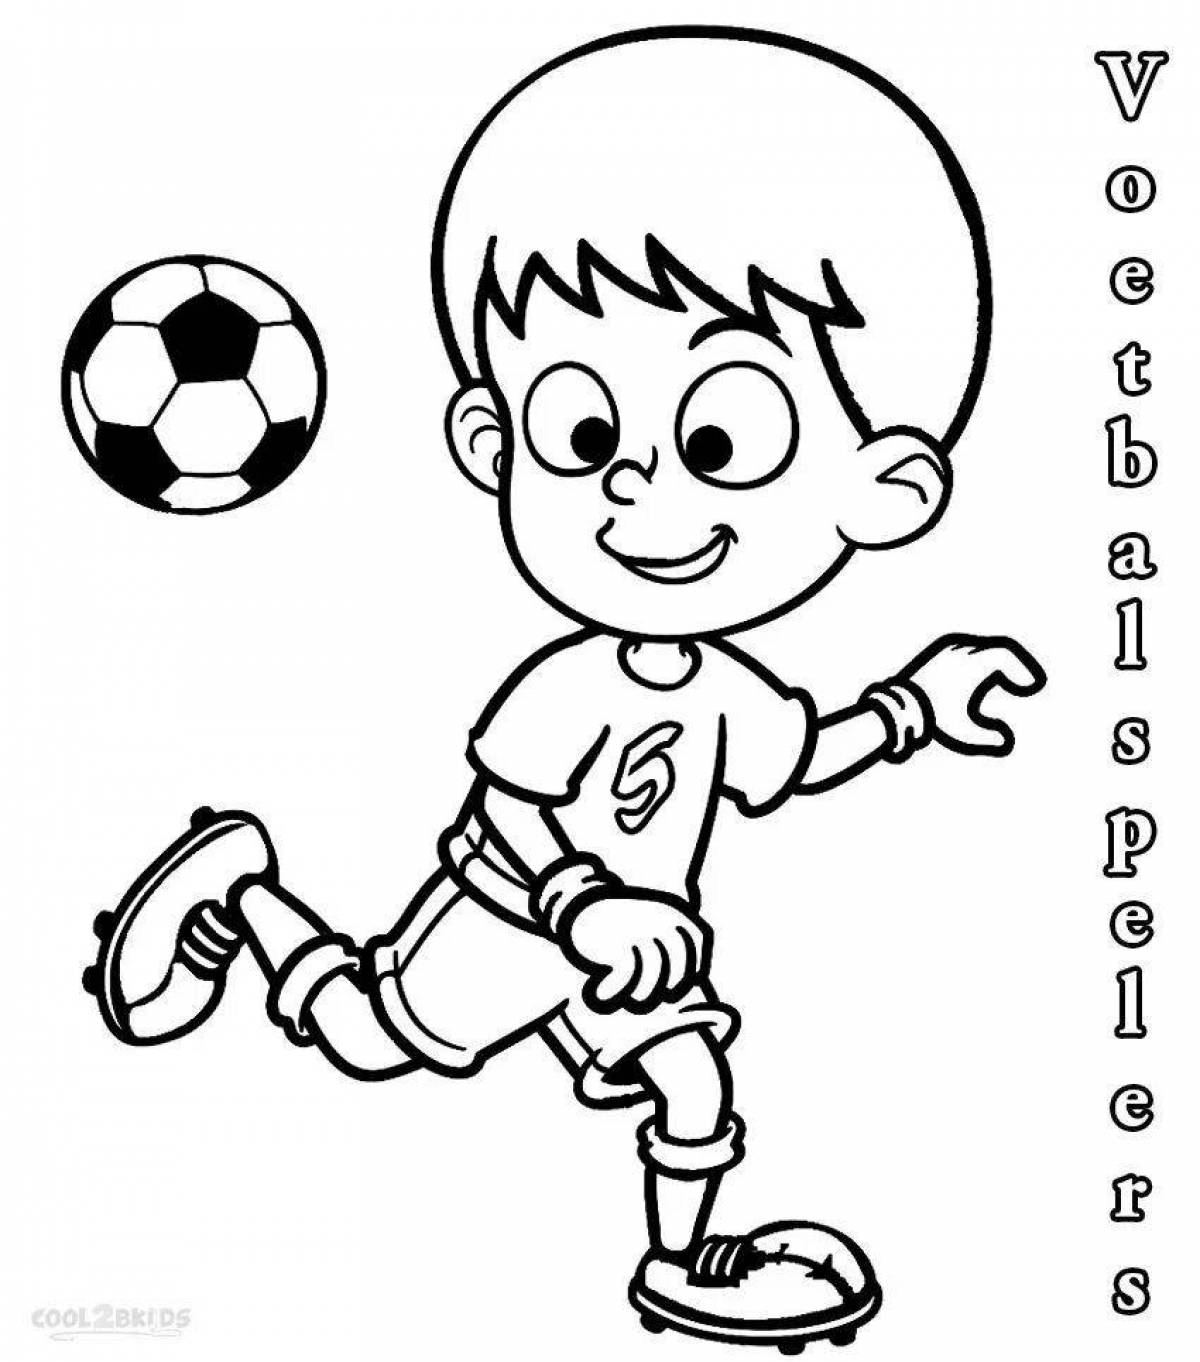 Coloring book diligent footballer